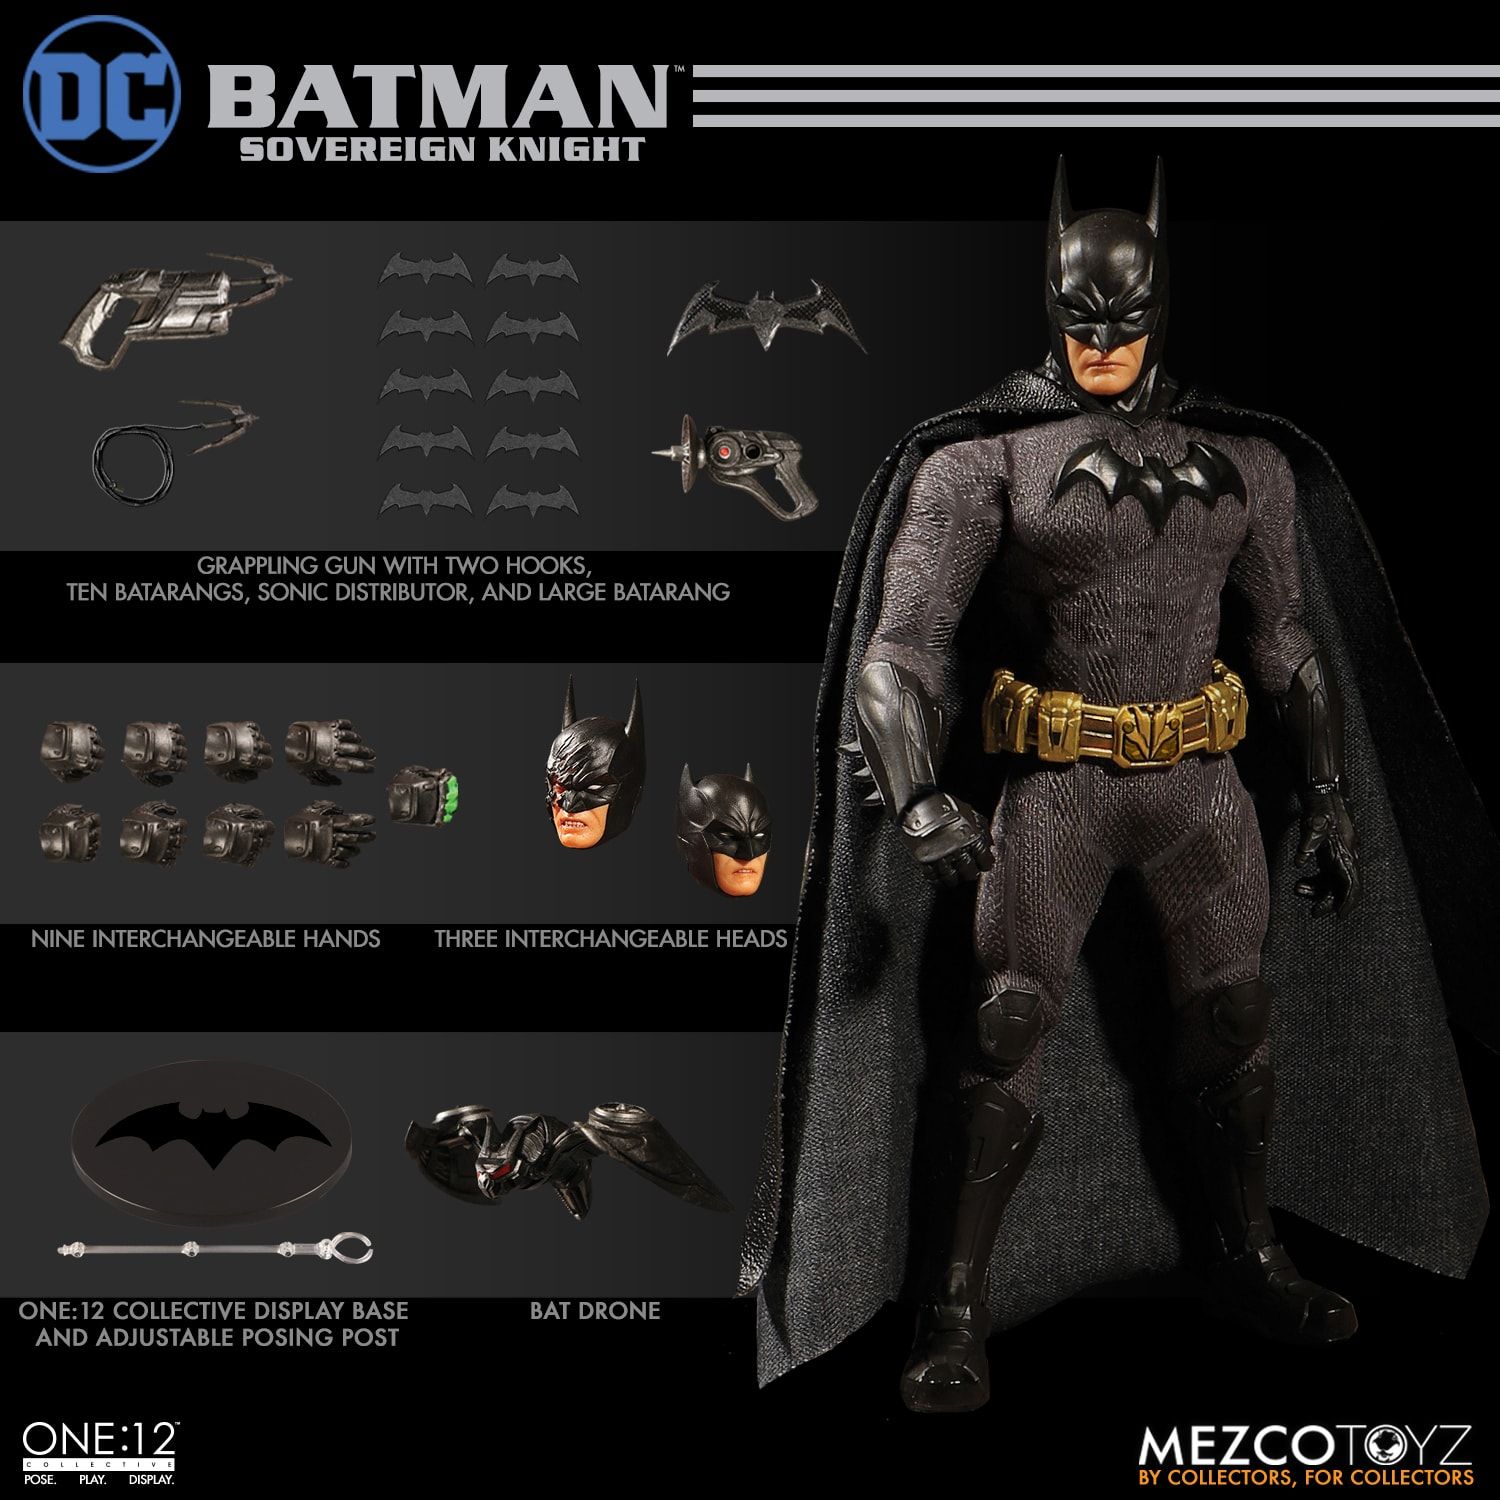 mezco one 12 batman tactical suit